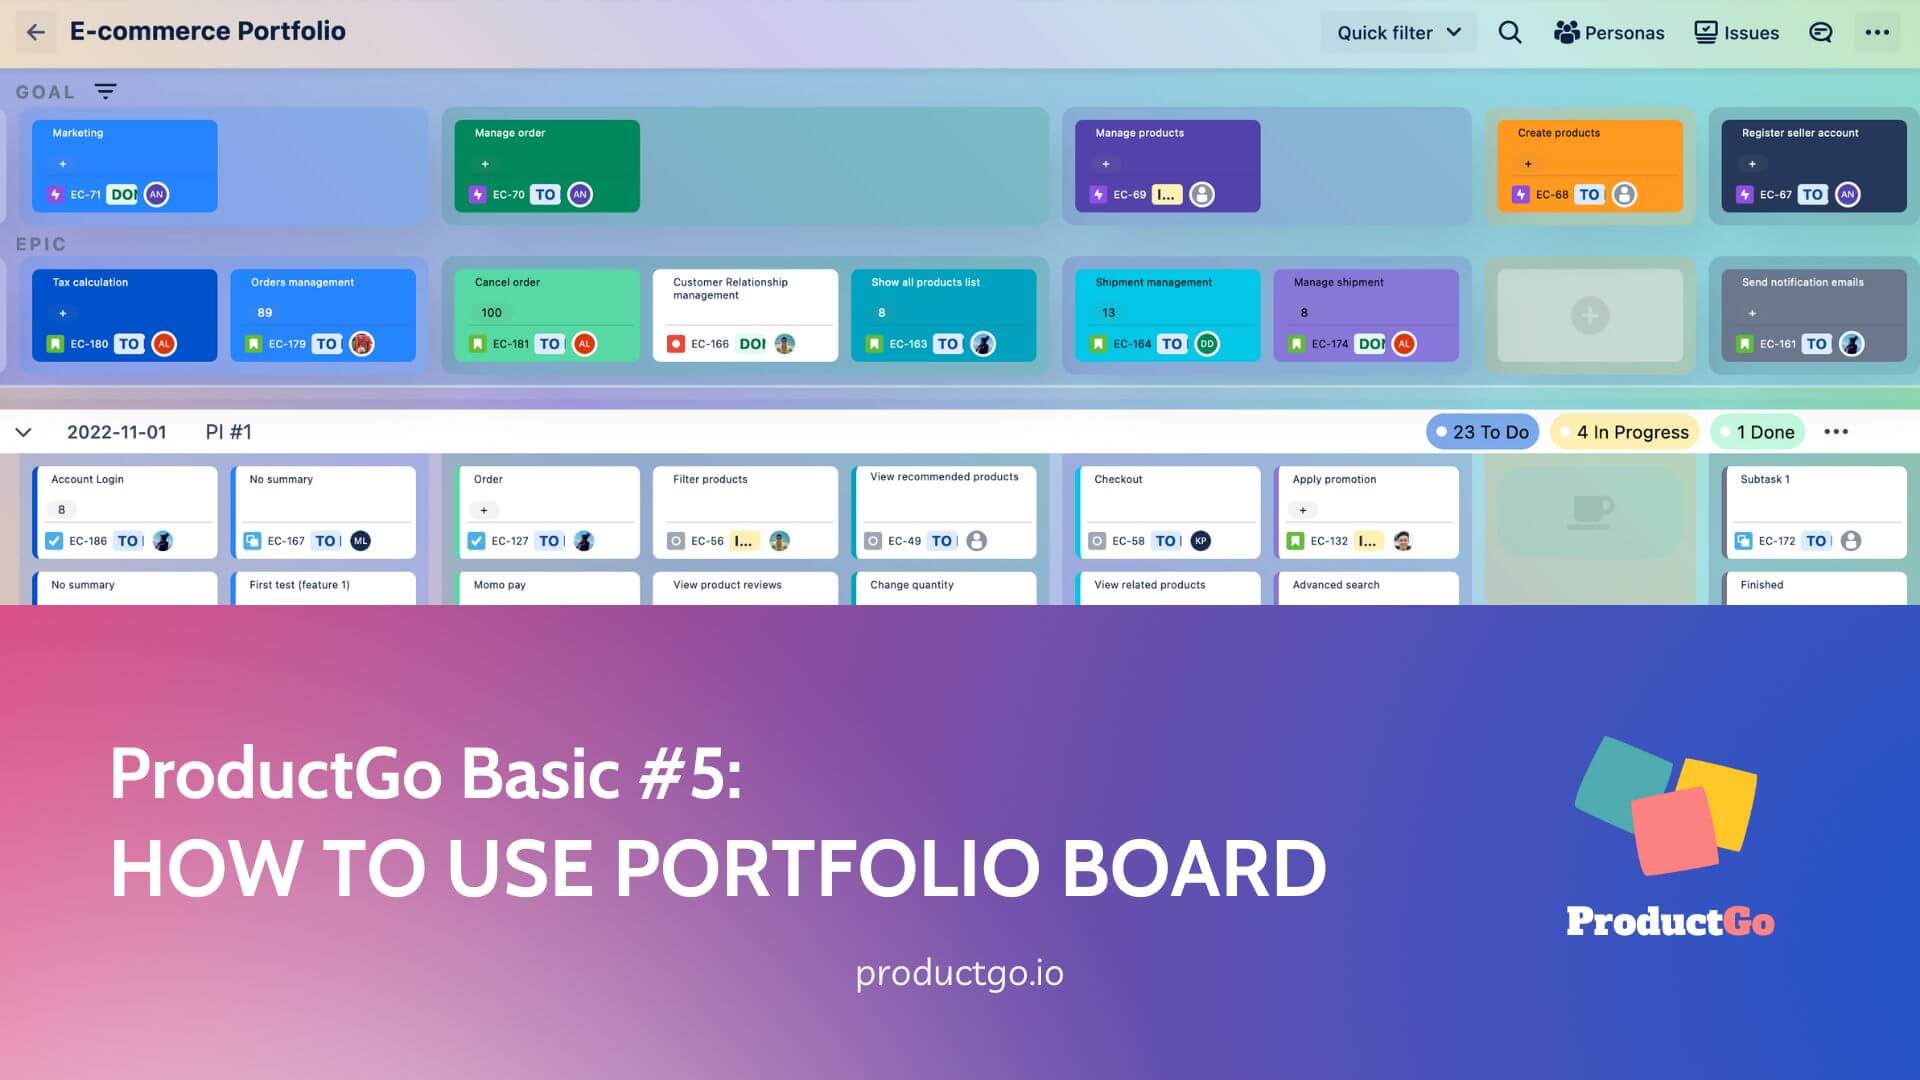 ProductGo Basic #5 How to use Portfolio Board by ProductGo (1)